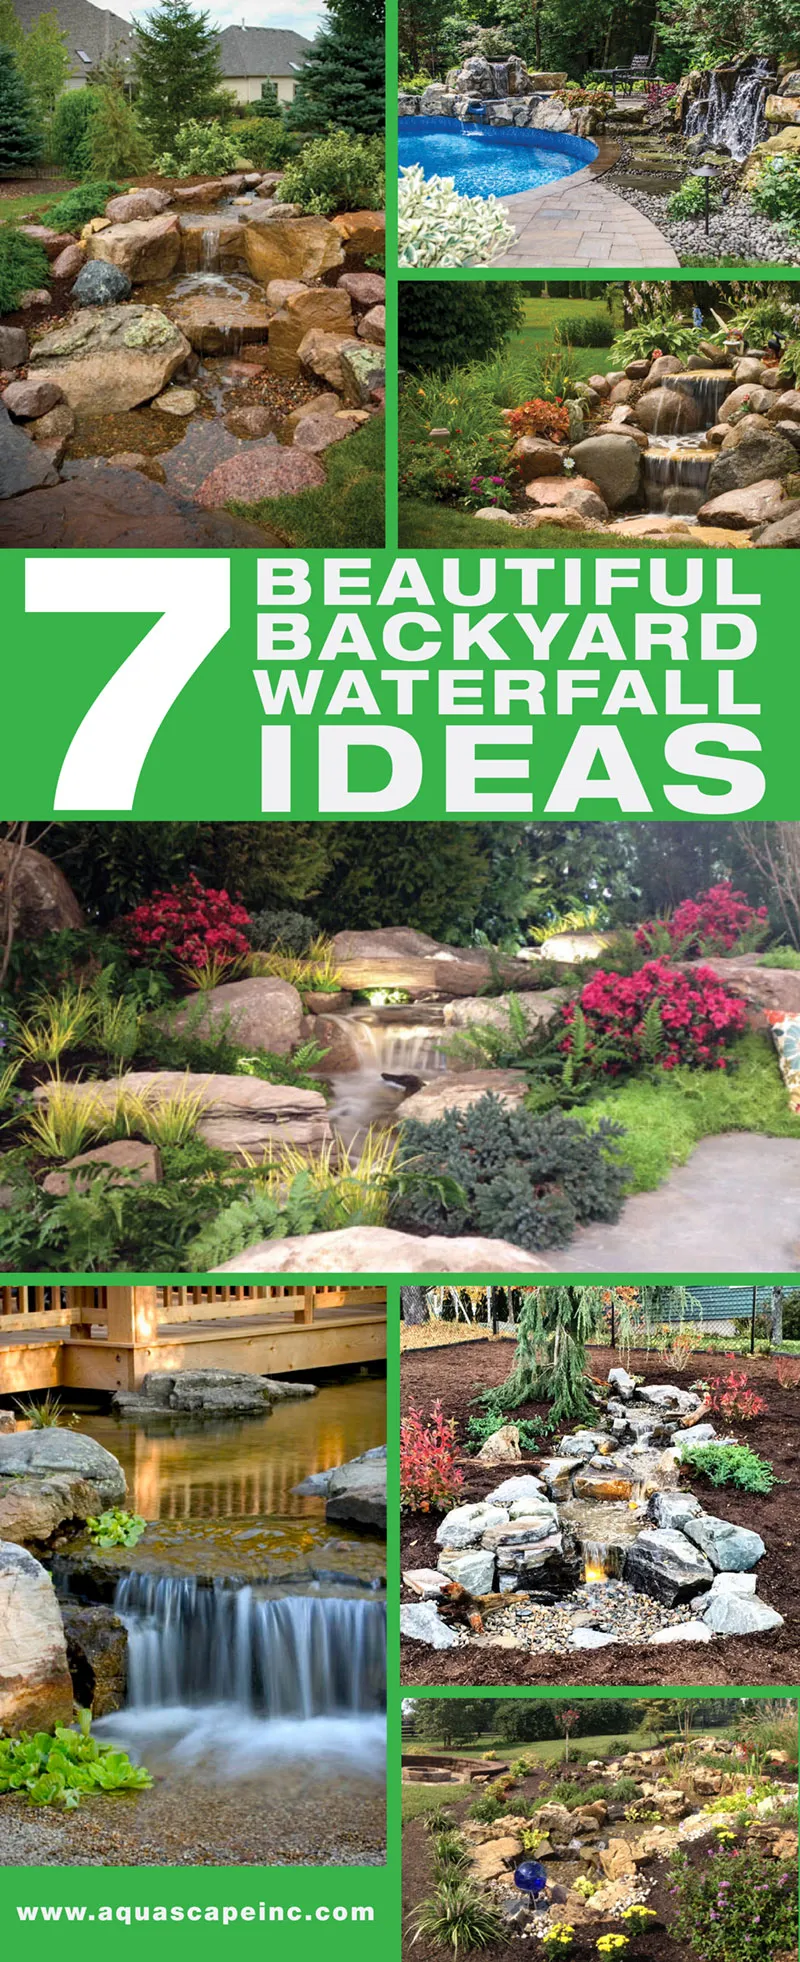 7 Backyard Waterfall Ideas